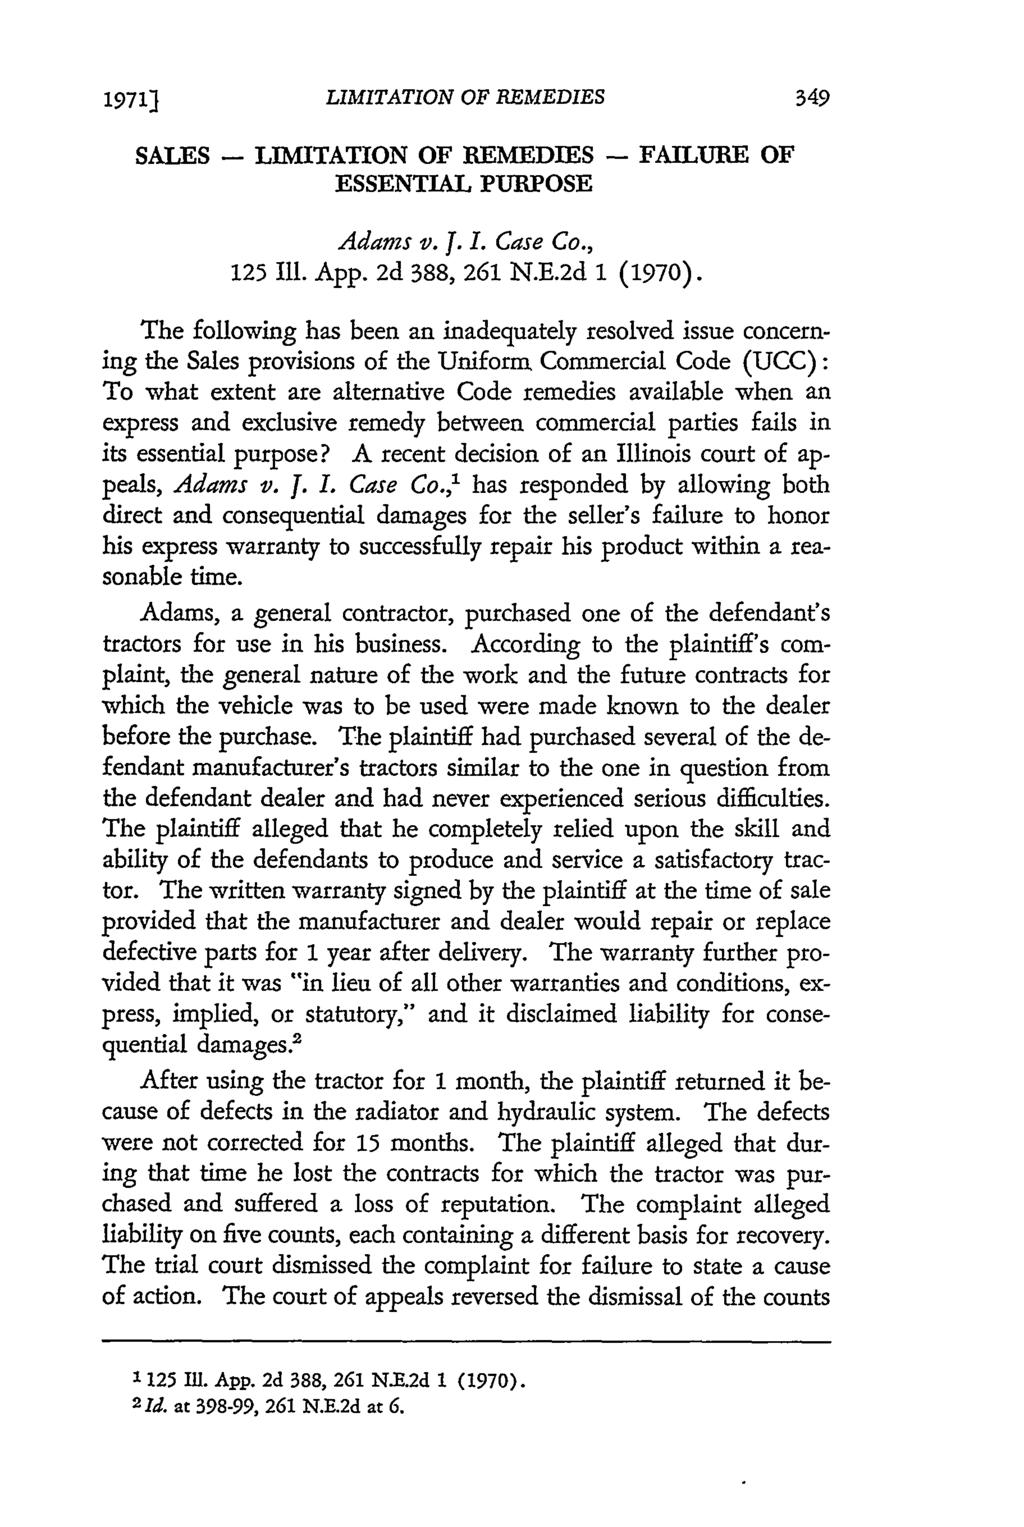 19711 LIMITATION OF REMEDIES SALES - LIMITATION OF REMEDIES - FAILURE OF ESSENTIAL PURPOSE Adams v. 1. I. Case Co., 125 Ill. App. 2d 388, 261 N.E.2d 1 (1970).